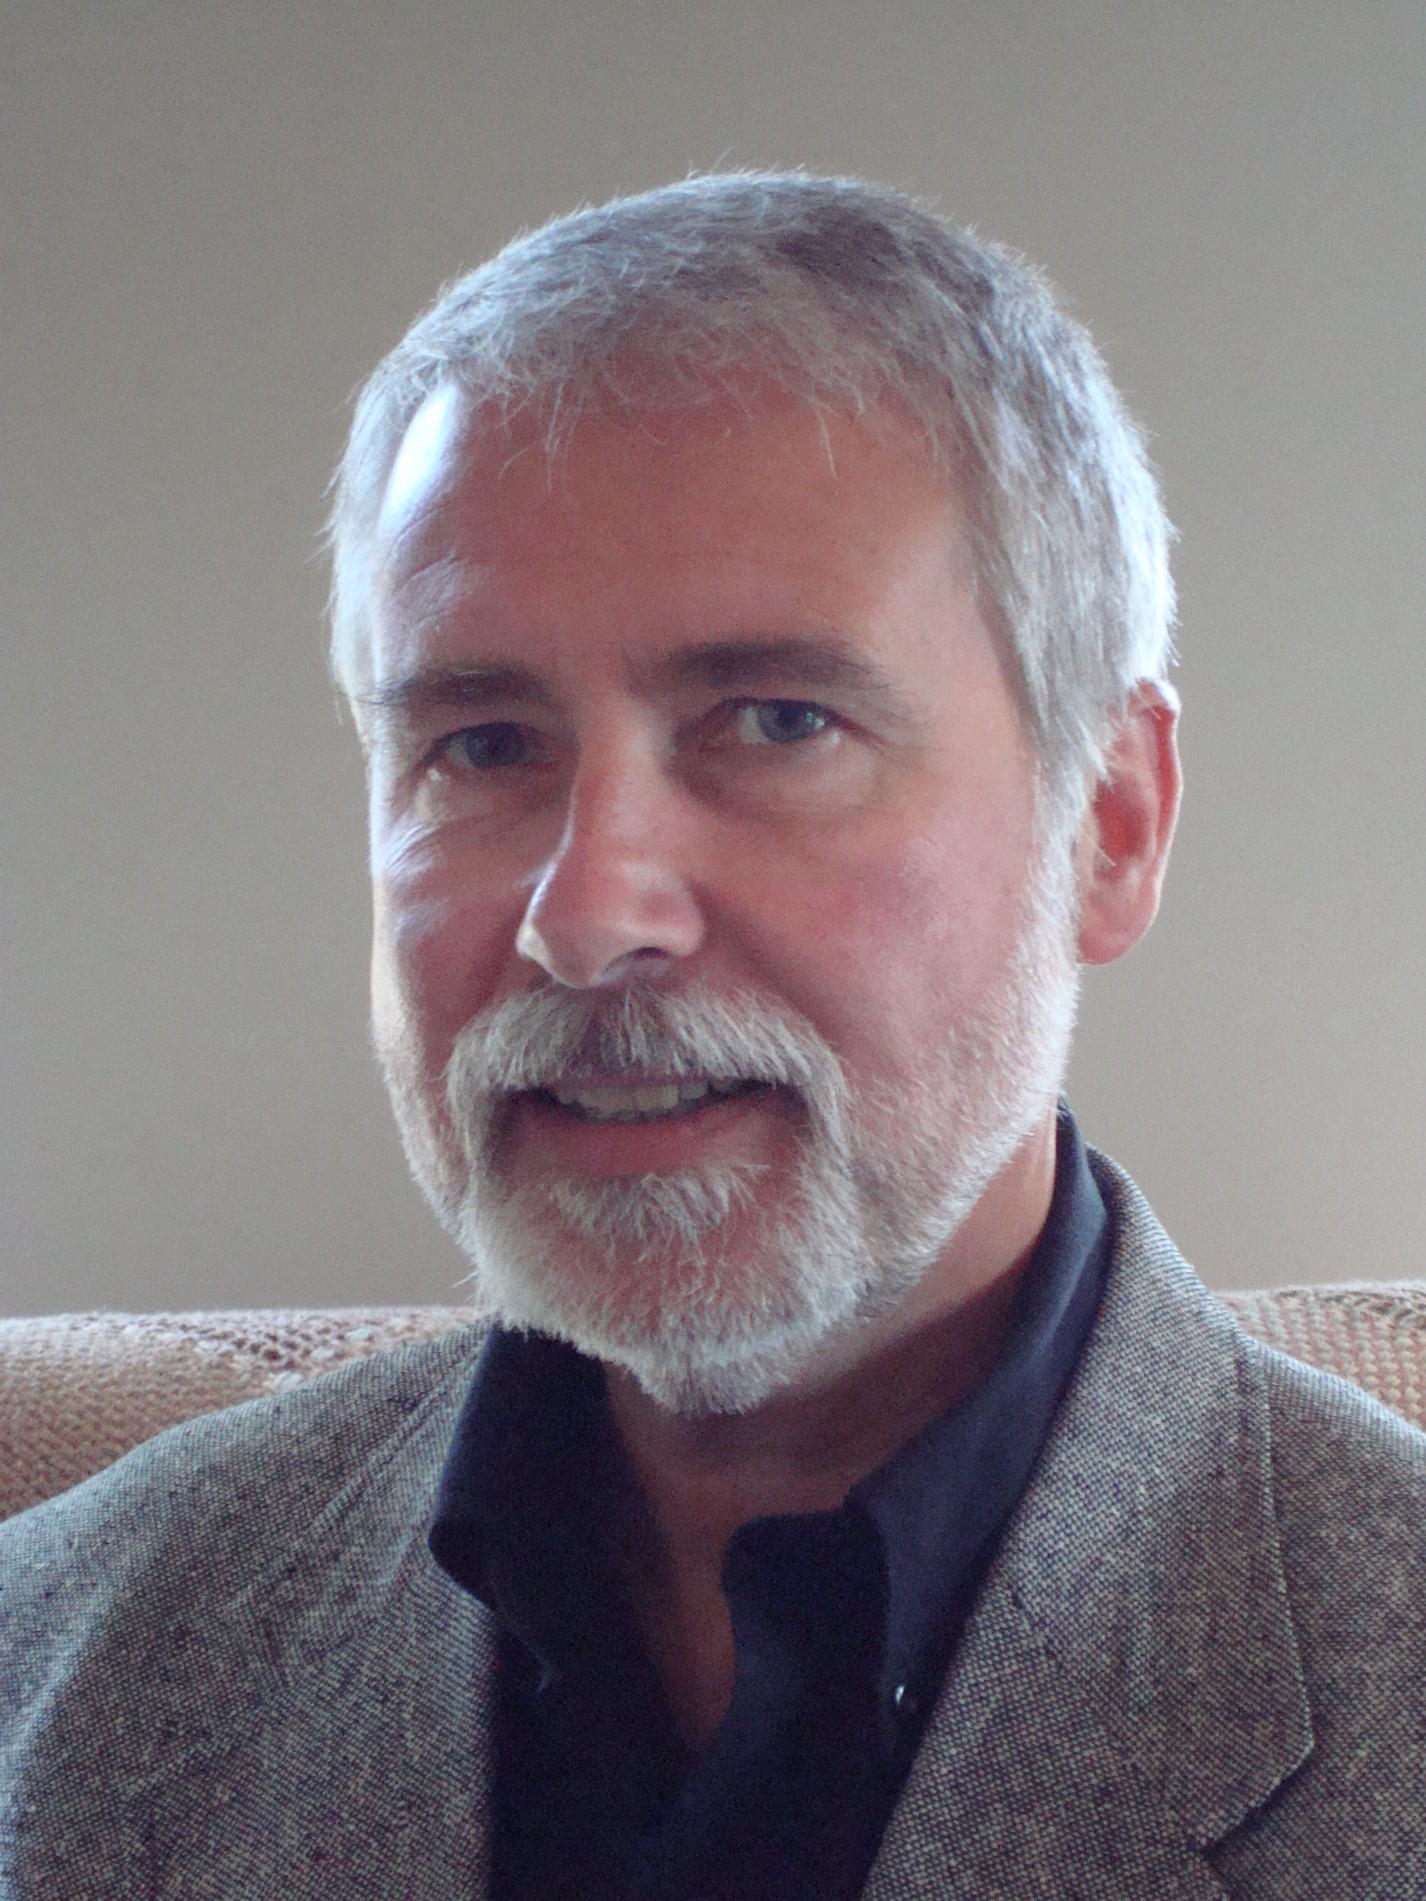 NASA's Mars Exploration Program Director, Jim Watzin